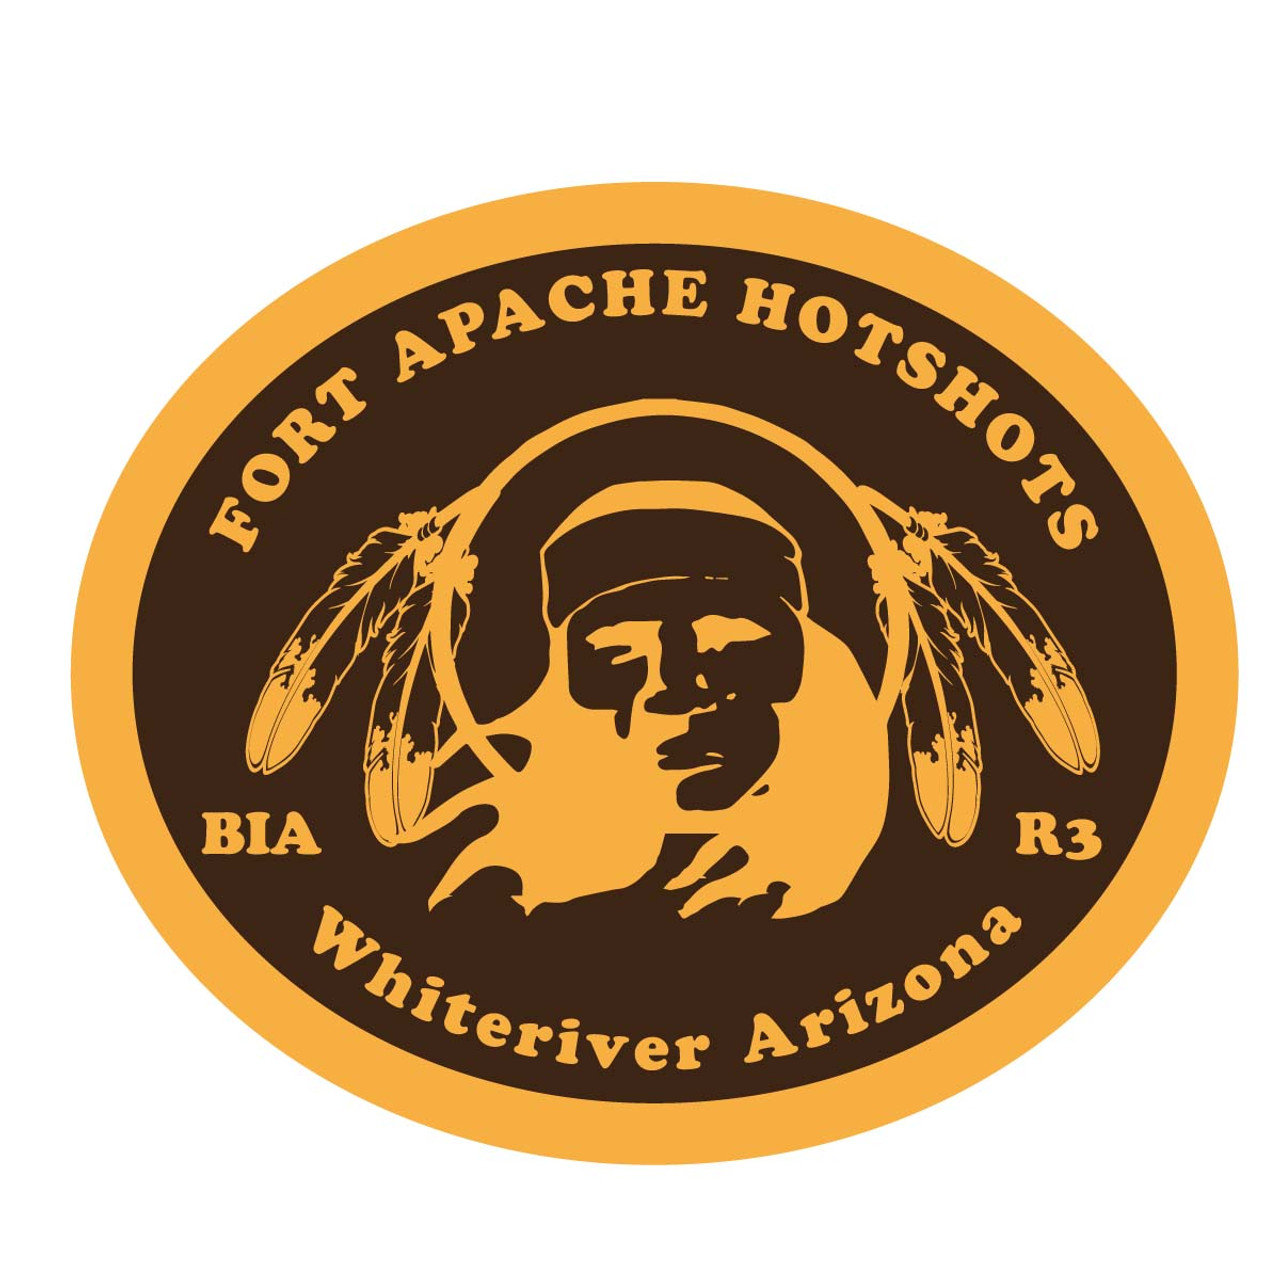 Fort Apache Hotshots BIA Whiteriver Arizona Buckle (RESTRICTED)